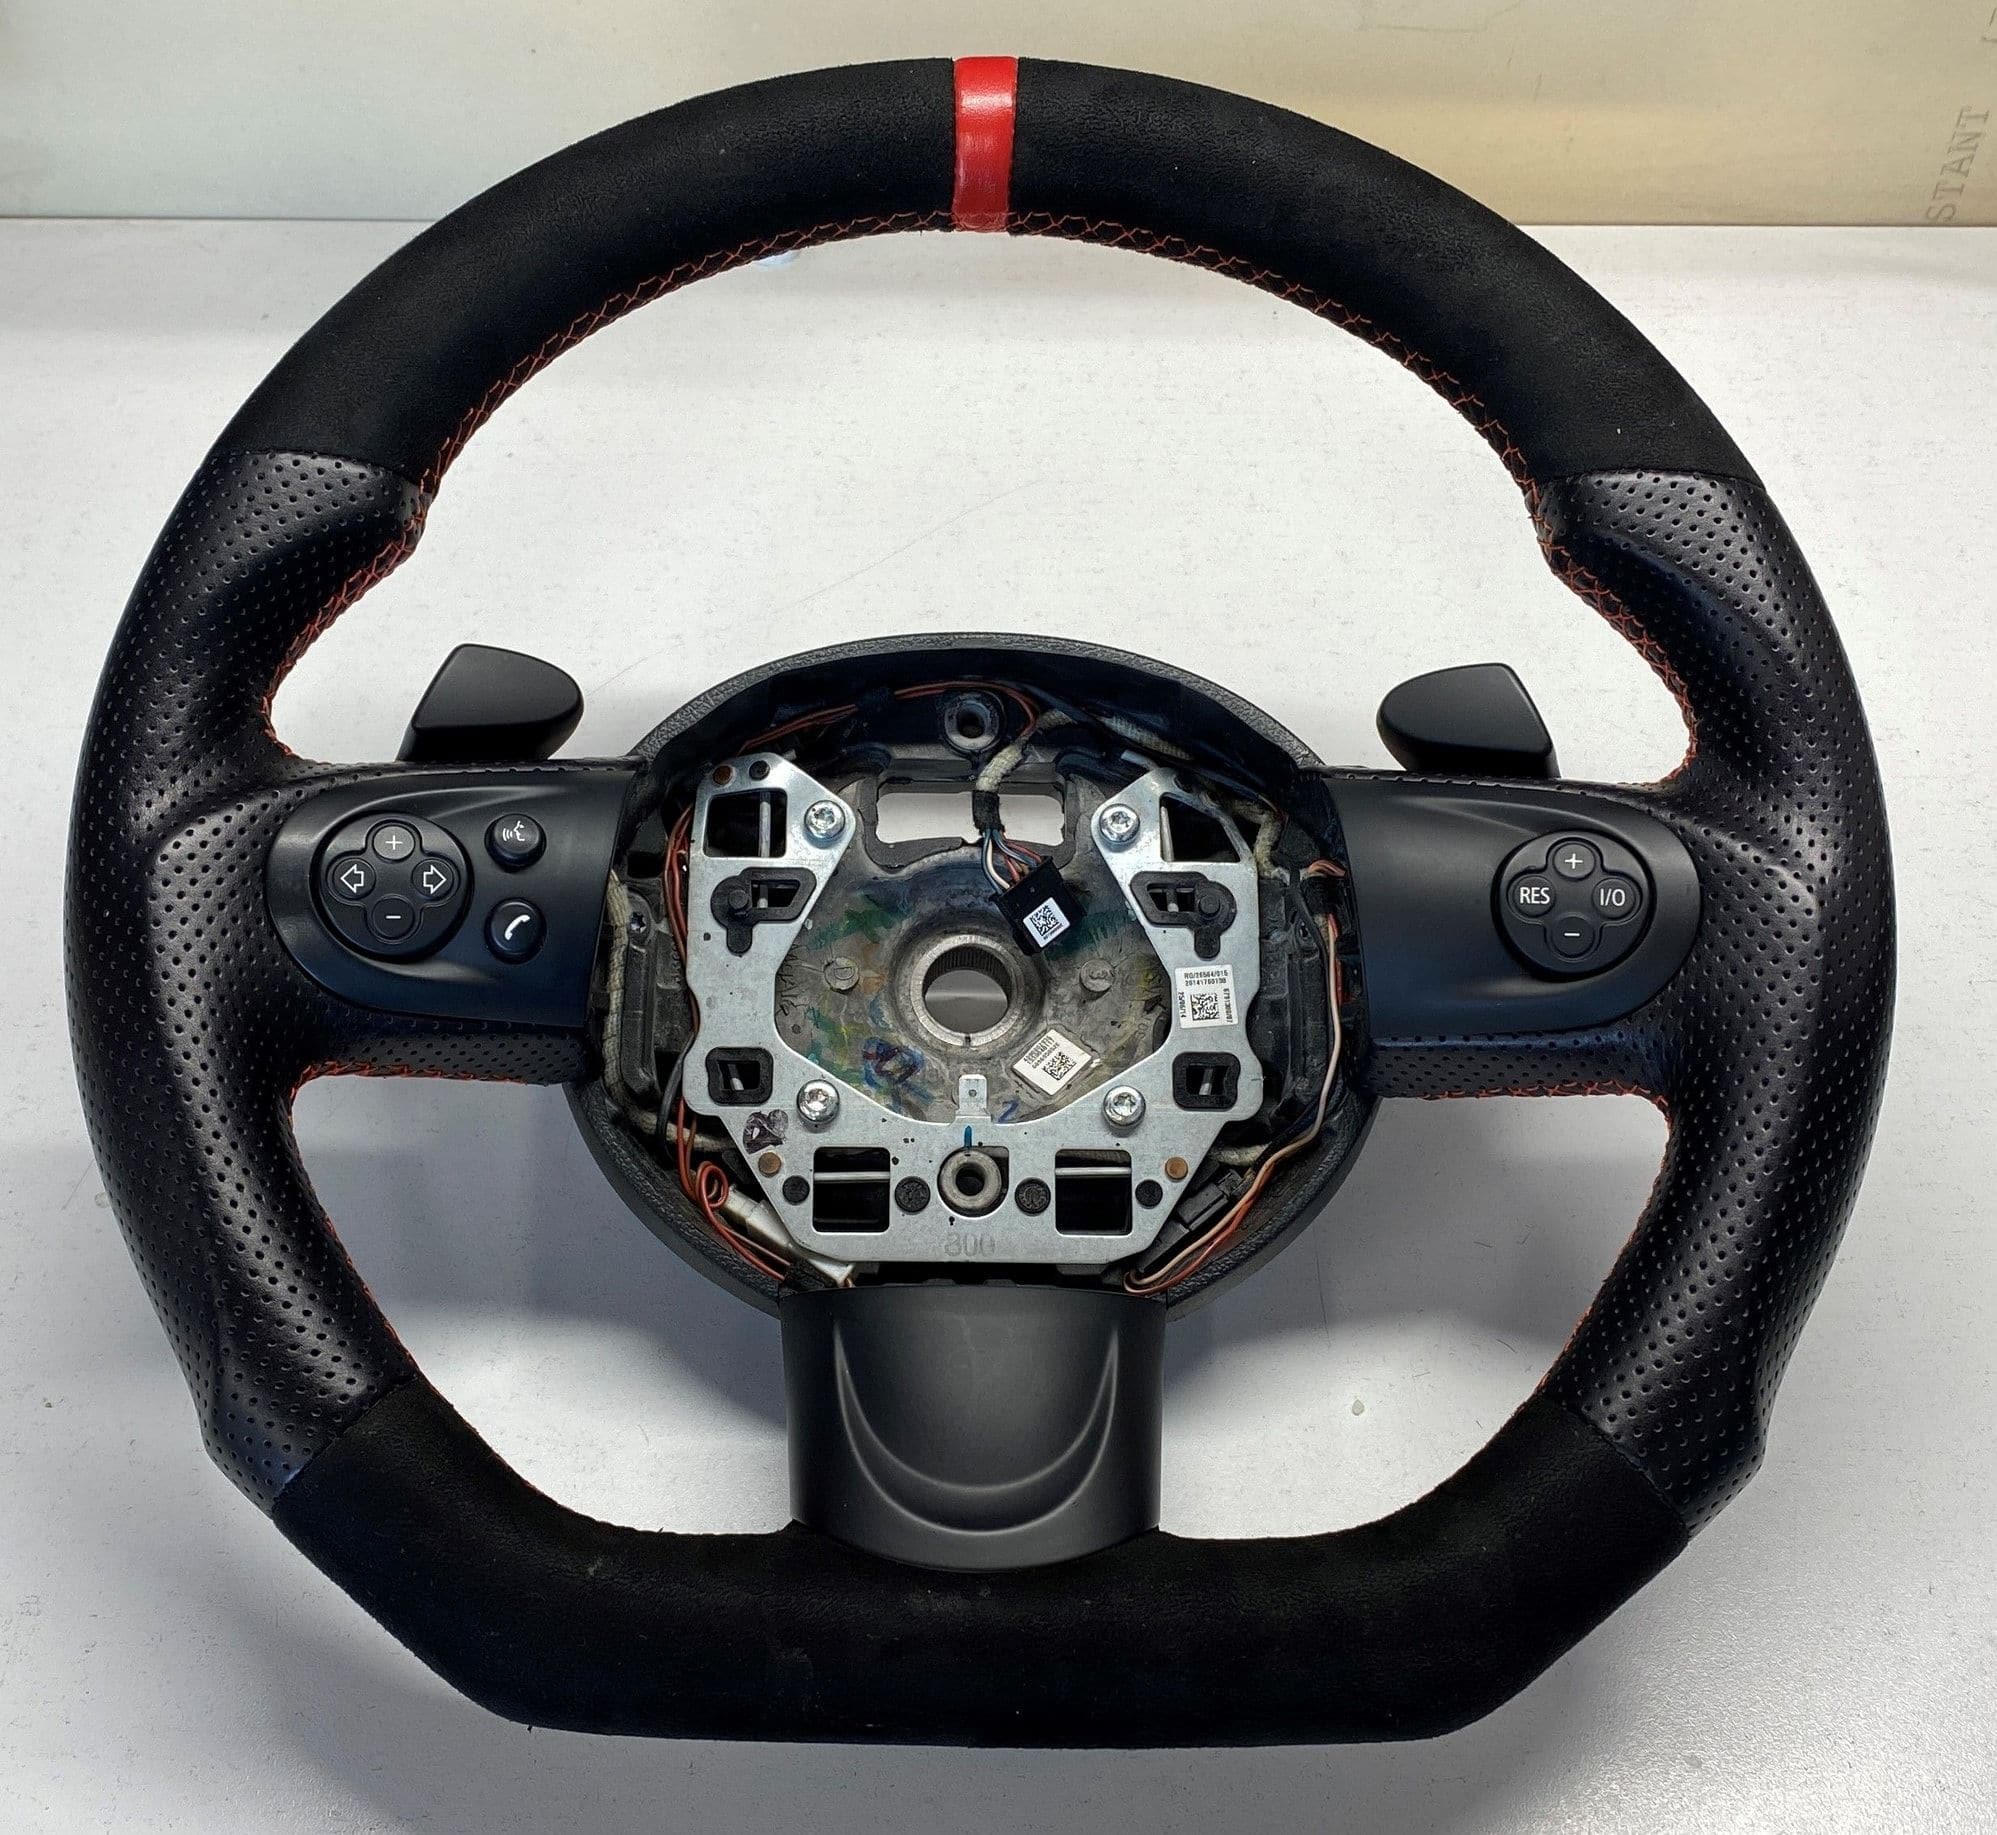 Steering/Suspension - Custom steering wheel for the R55, R56, R57, R58, R59, R60, R61 Mini Cooper - Used - 2007 to 2014 Mini All Models - San Leandro, CA 94577, United States